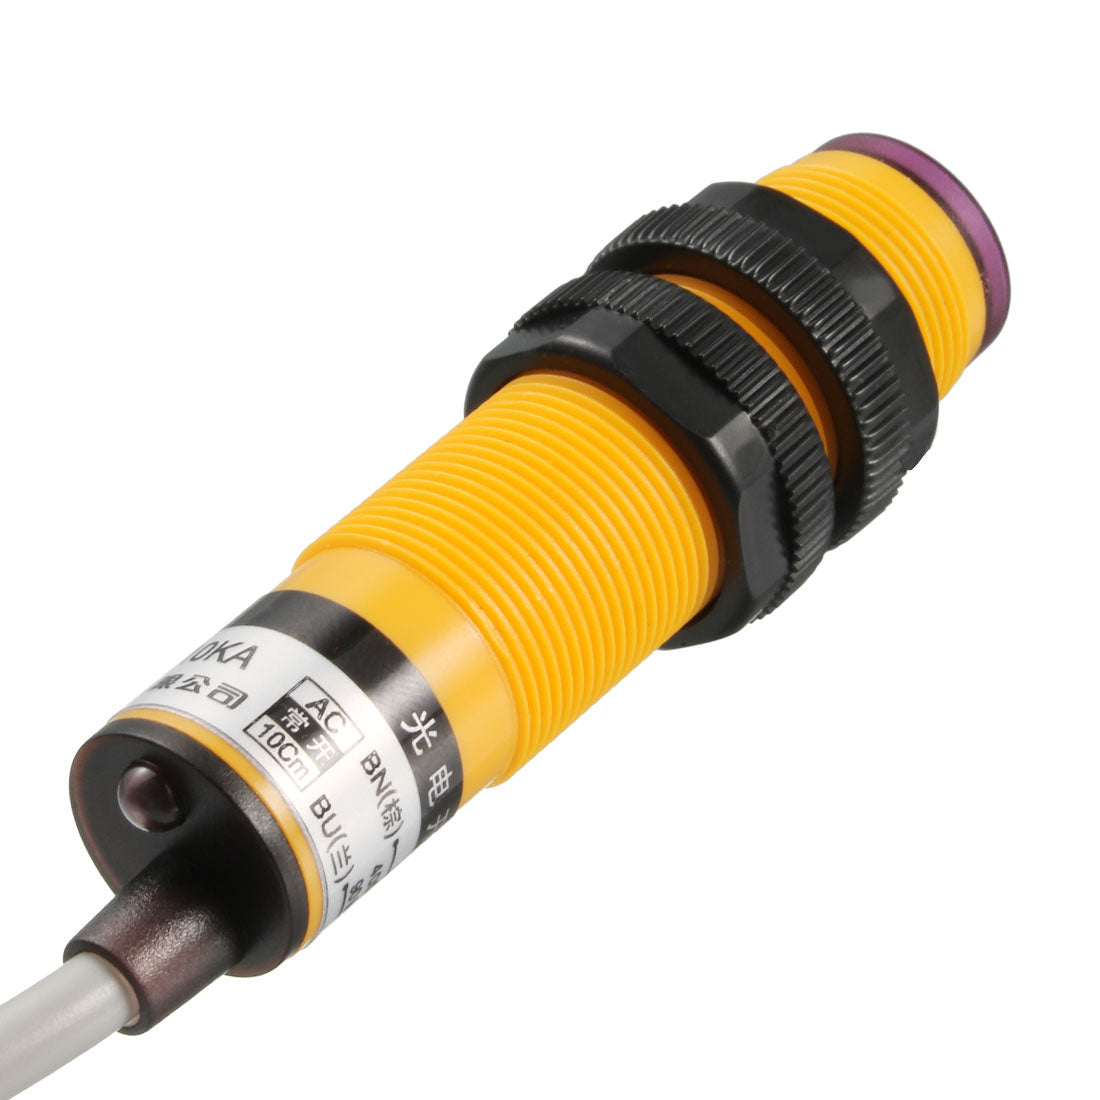 uxcell Uxcell 10cm Inductive Proximity Sensor Switch Detector NO AC 90-250V 400mA 2-wire E18-DS10KA